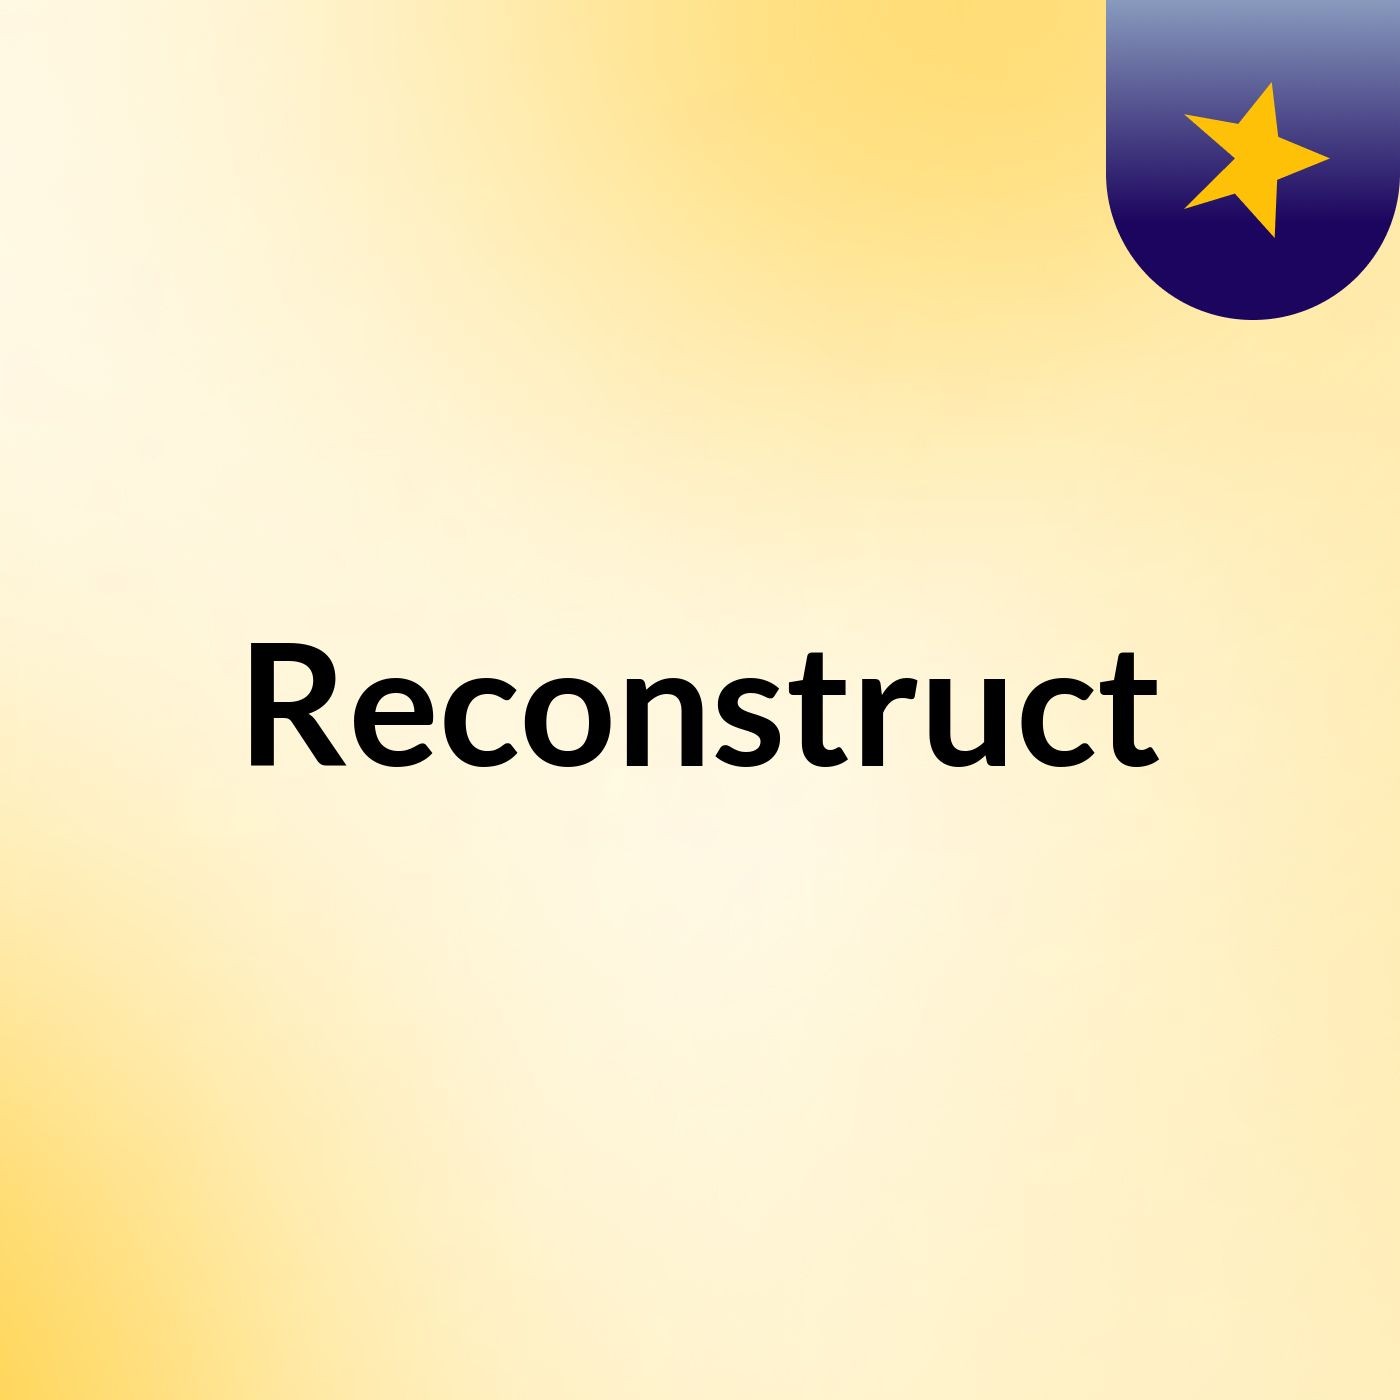 Reconstruct